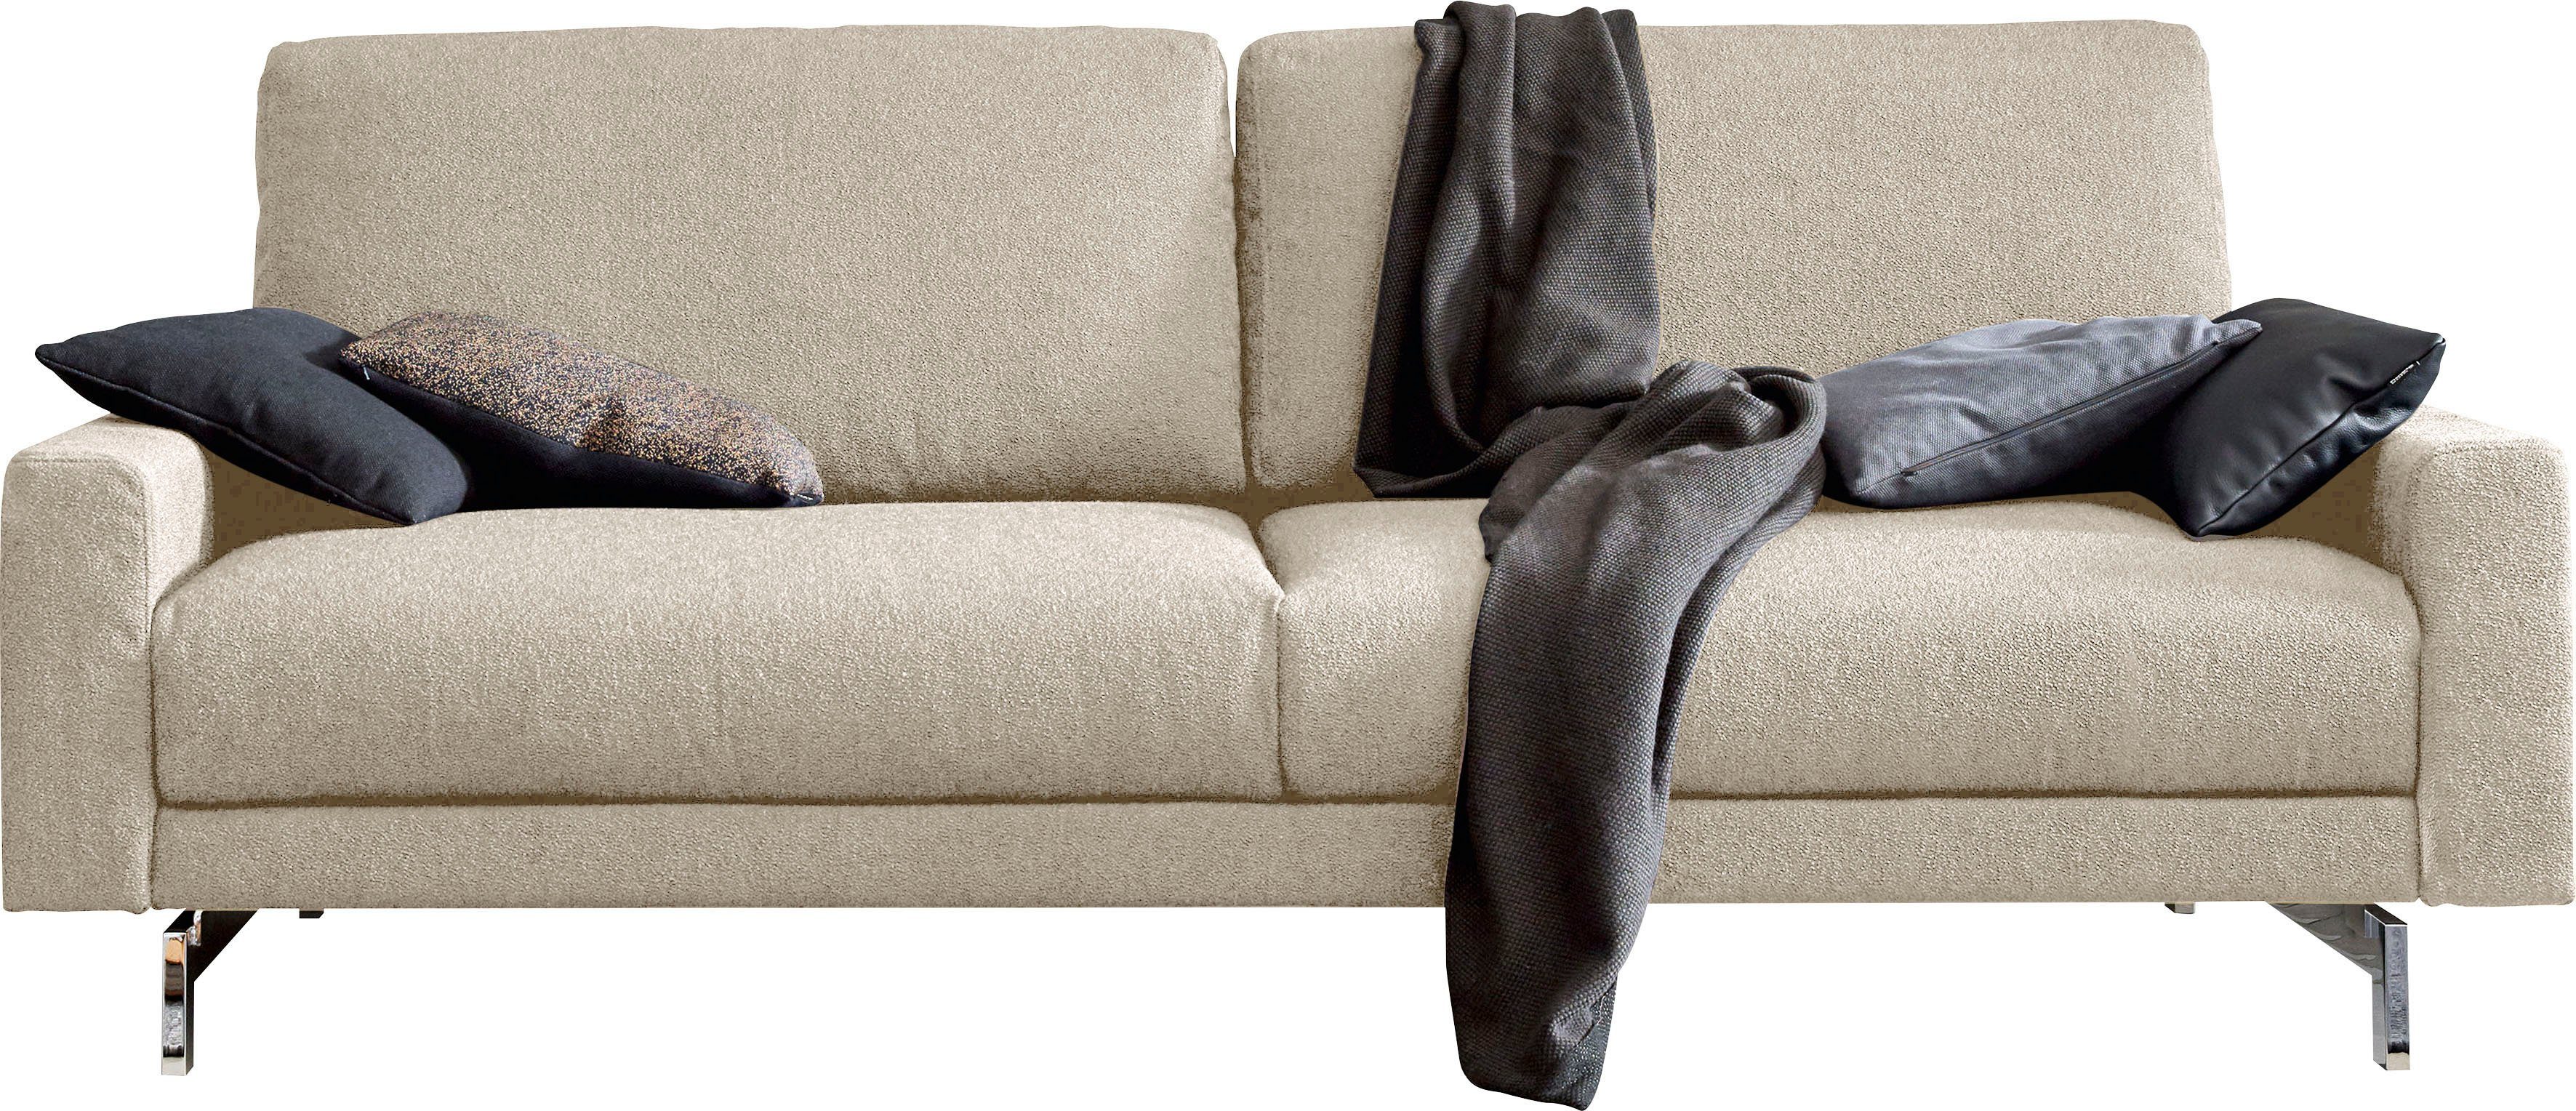 cm Fuß 184 hs.450, hülsta 2,5-Sitzer glänzend, niedrig, chromfarben sofa Breite Armlehne